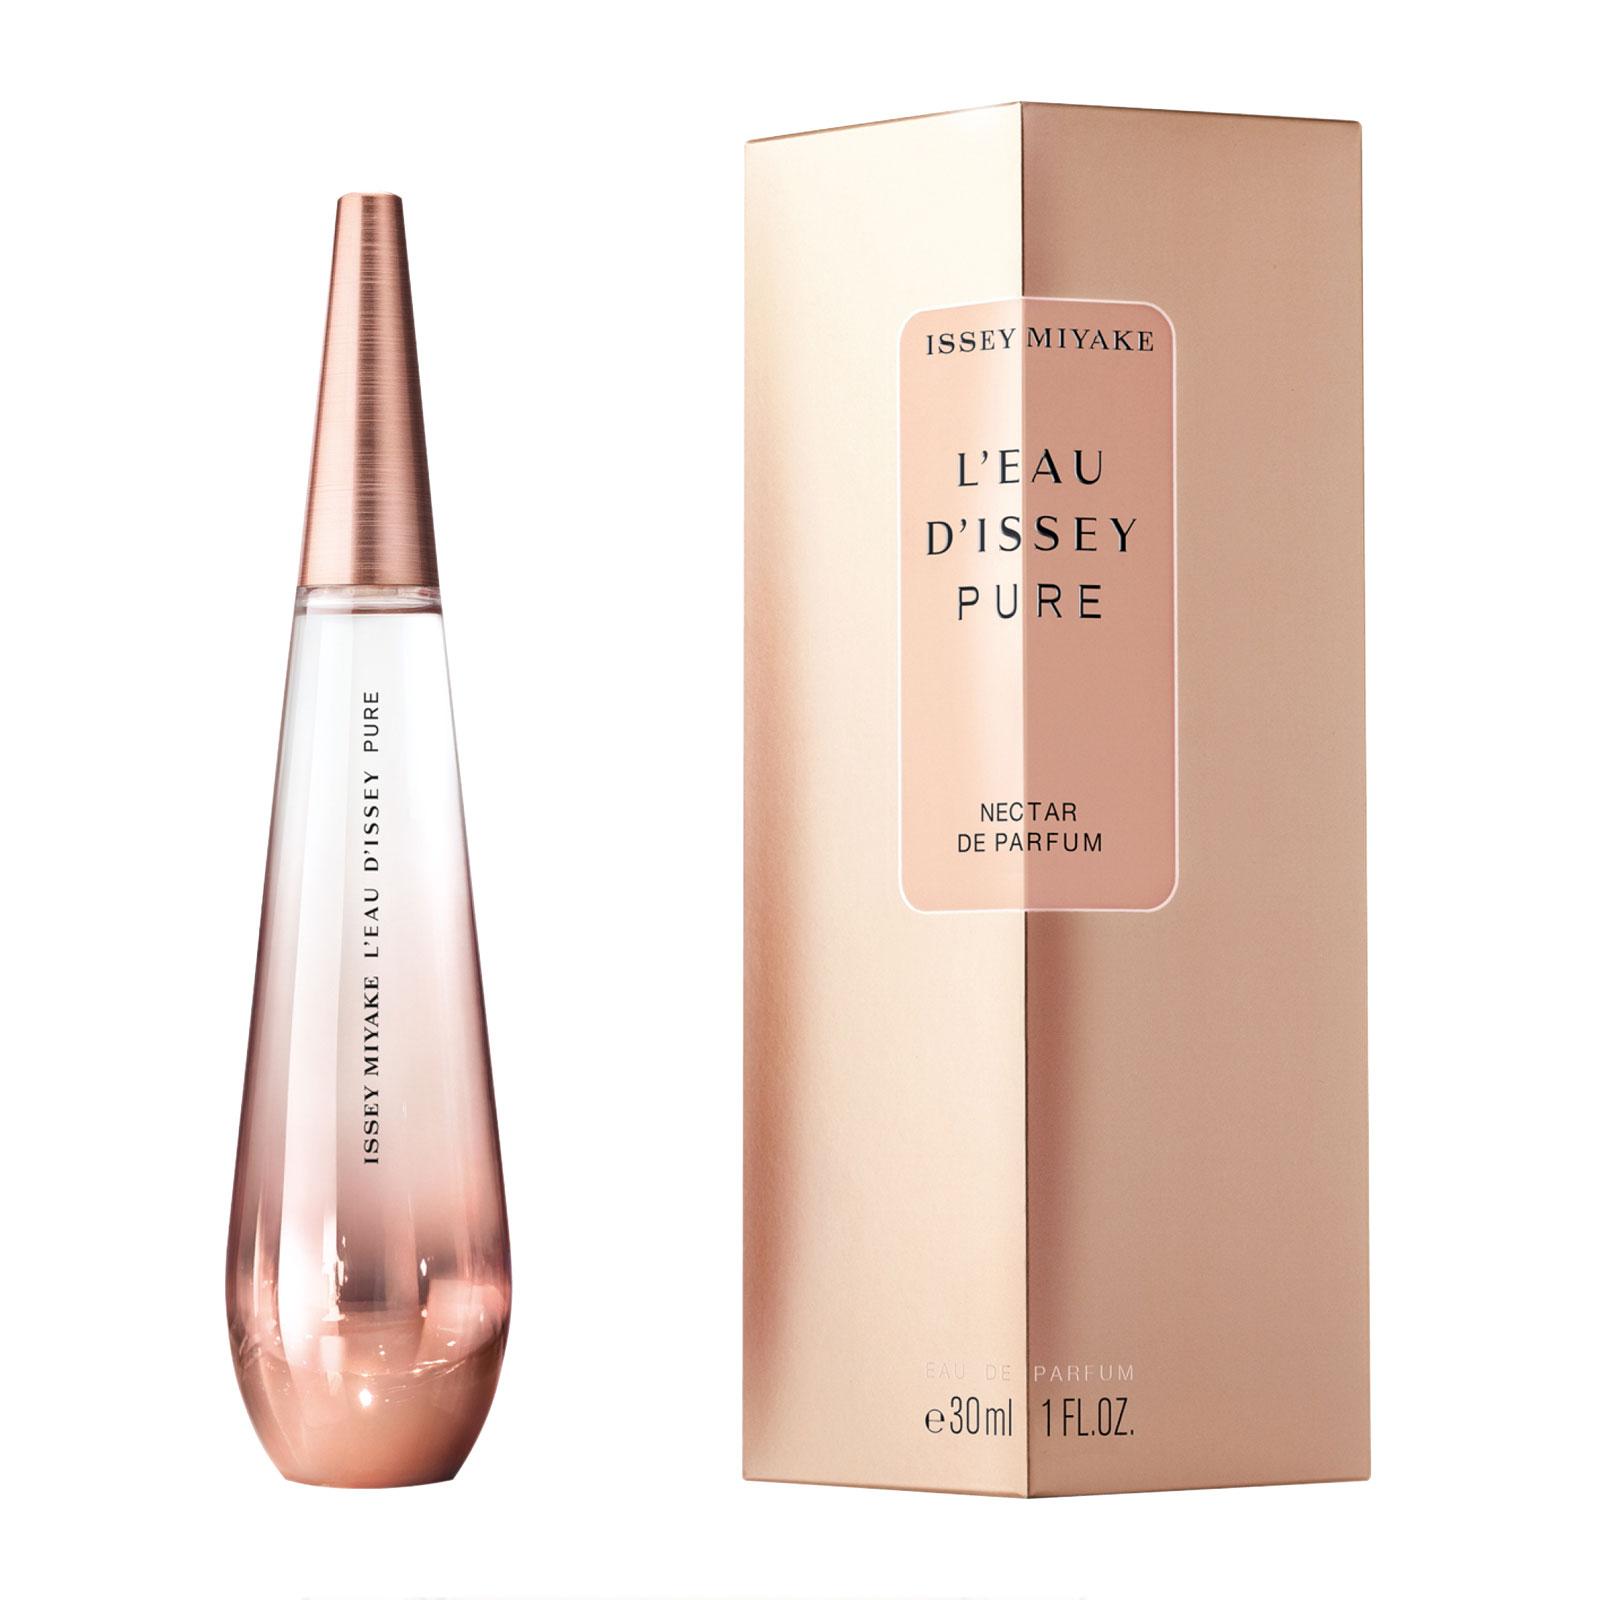 Issey Miyake L'Eau D'Issey Pure Nectar de Parfum 30ml - Feelunique